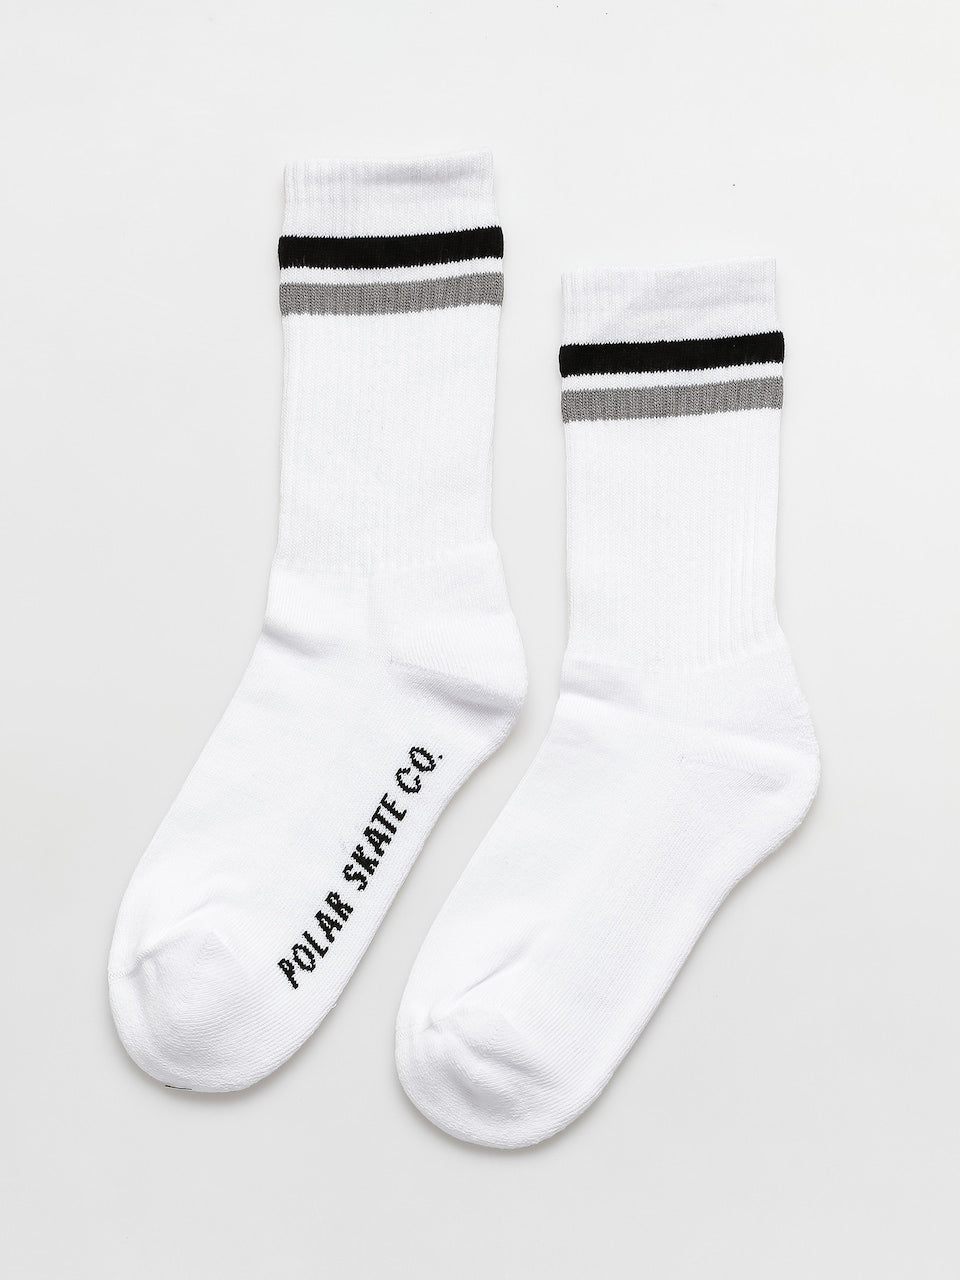 Polar Skate Co. Stripe Socks (White/Black/Grey) - Apple Valley Emporium